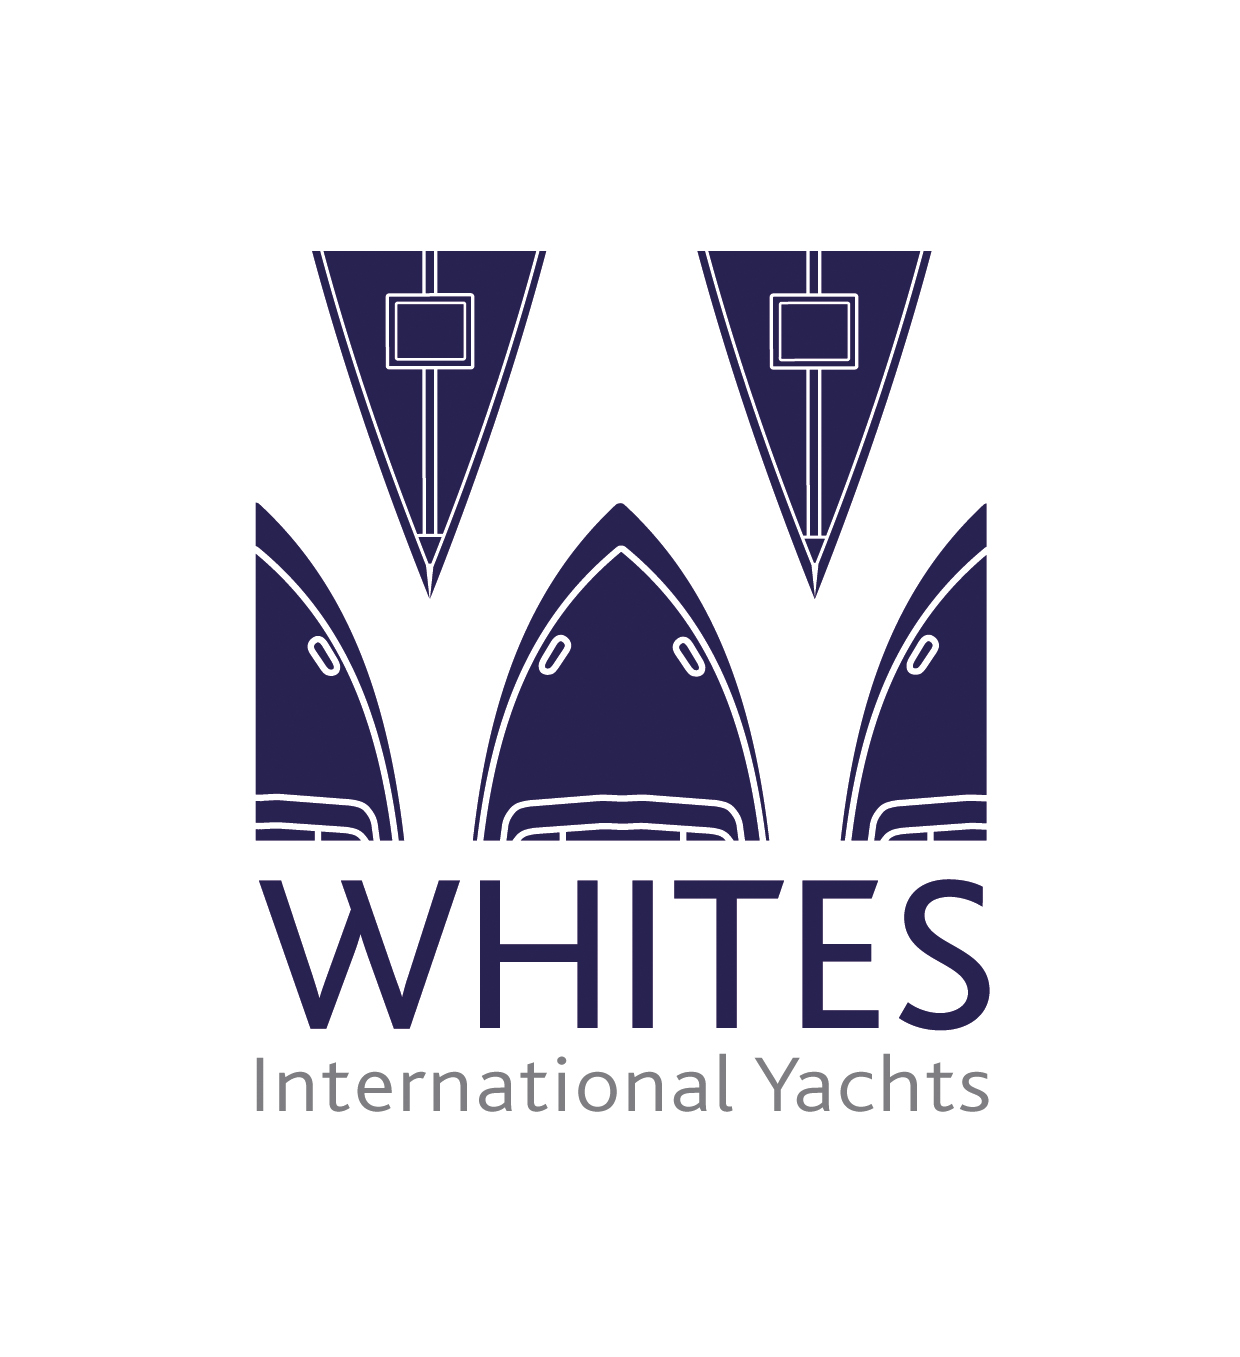 Whites International Yachts